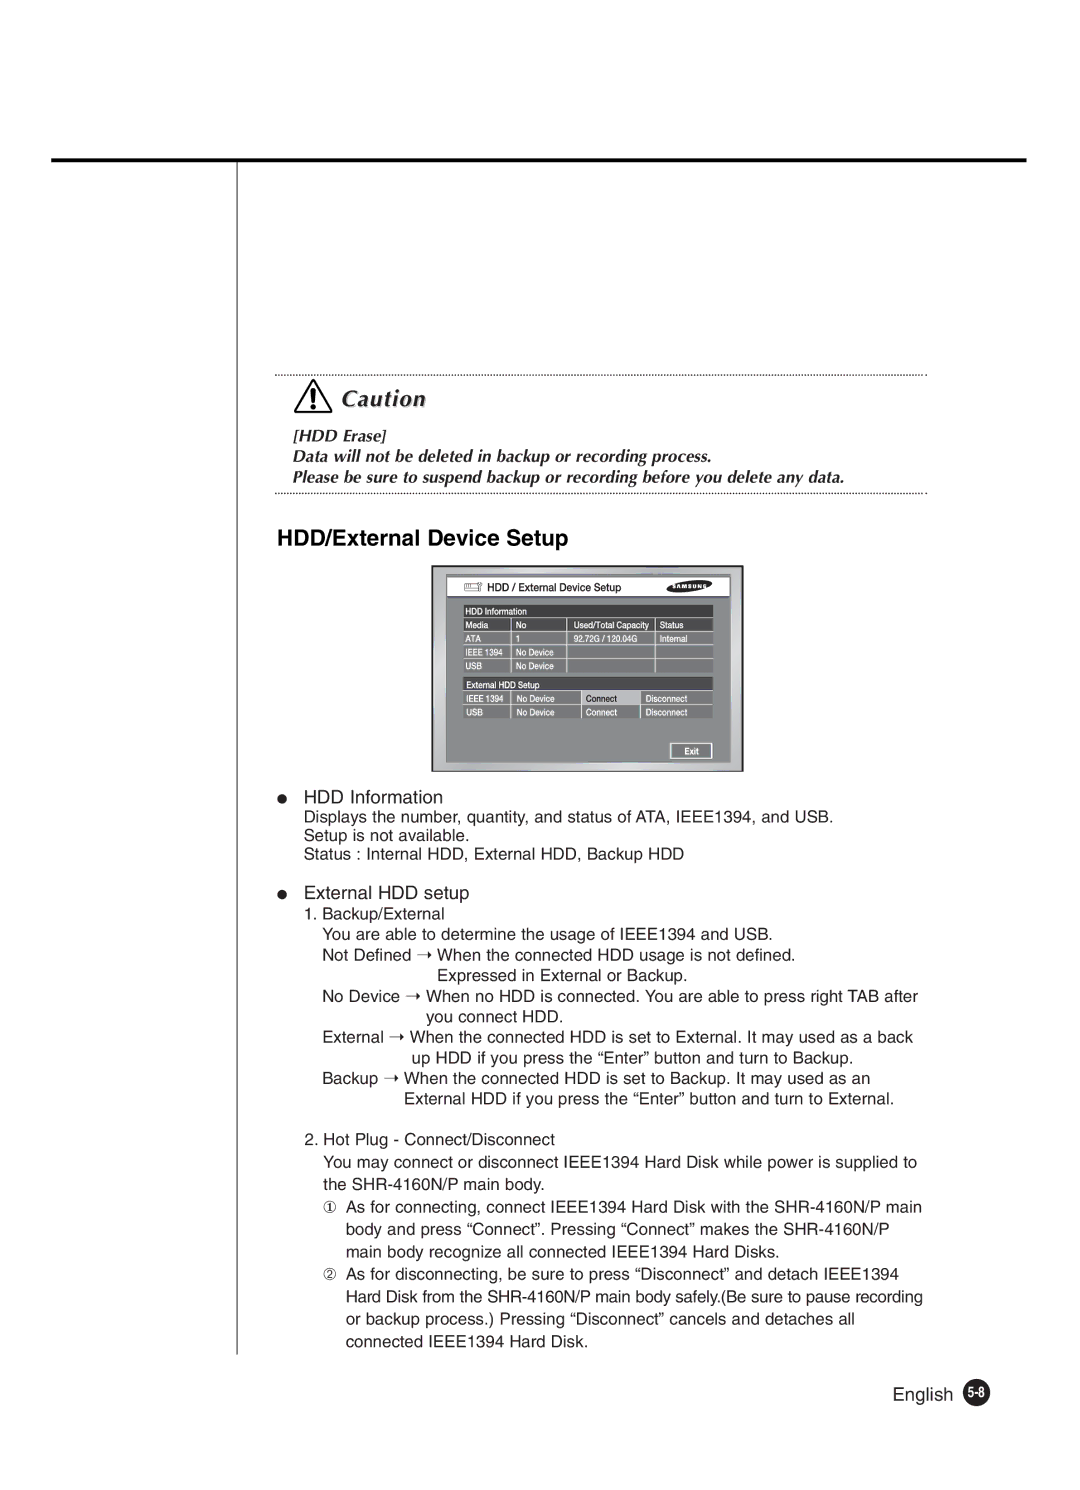 Samsung SHR-4160P manual HDD/External Device Setup, HDD Information, External HDD setup 